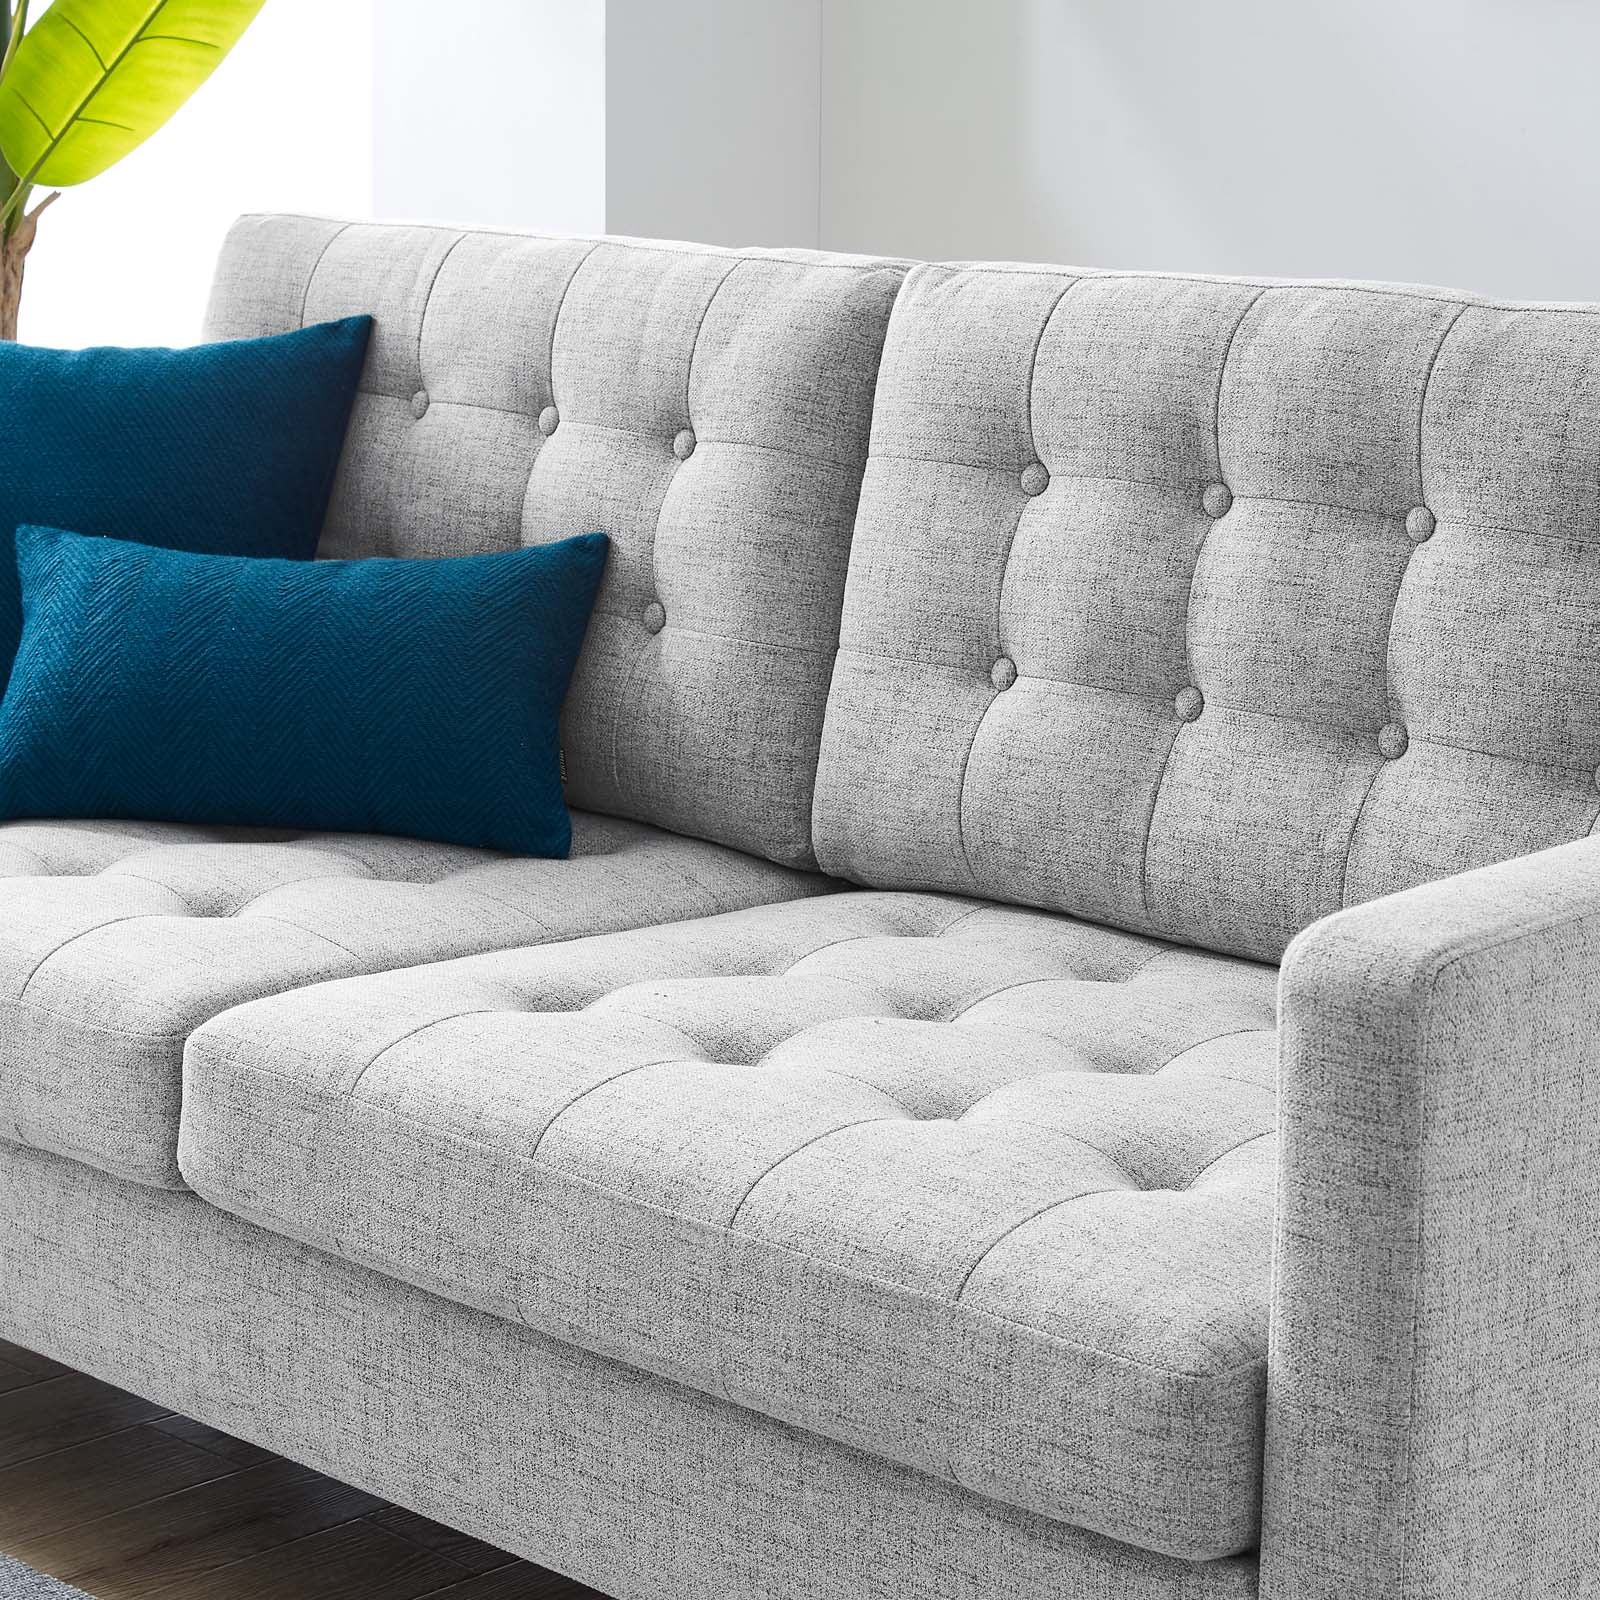 Modway Sofas & Couches - Exalt Tufted Fabric Sofa Light Gray